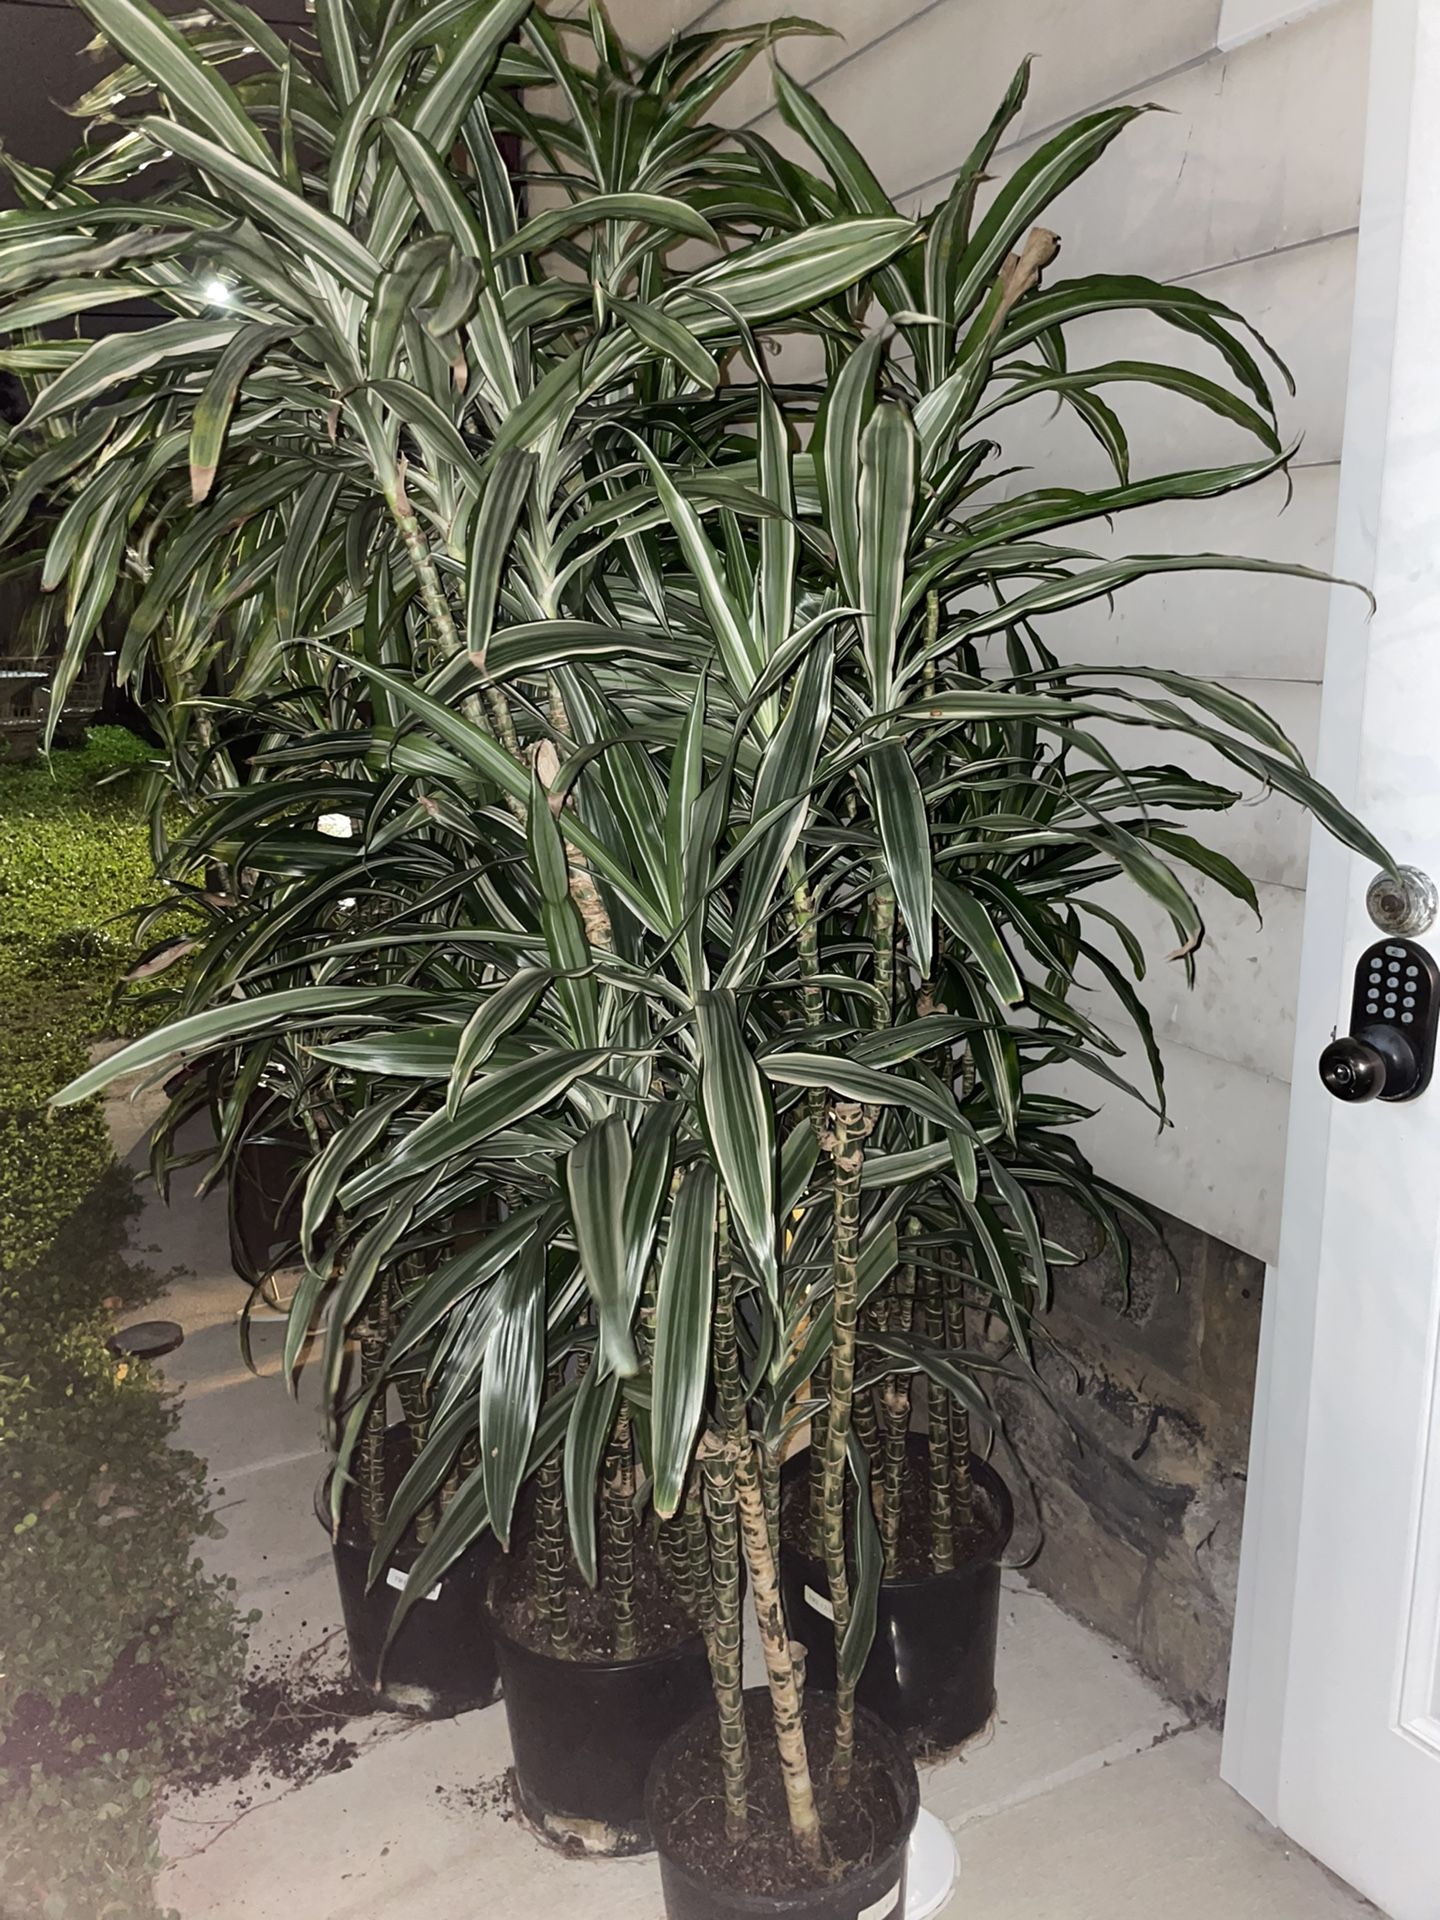 Tall White Bird Dracaena Houseplants Plants Foliage 6’-7’ Tall 5-6 Plants Per Pot